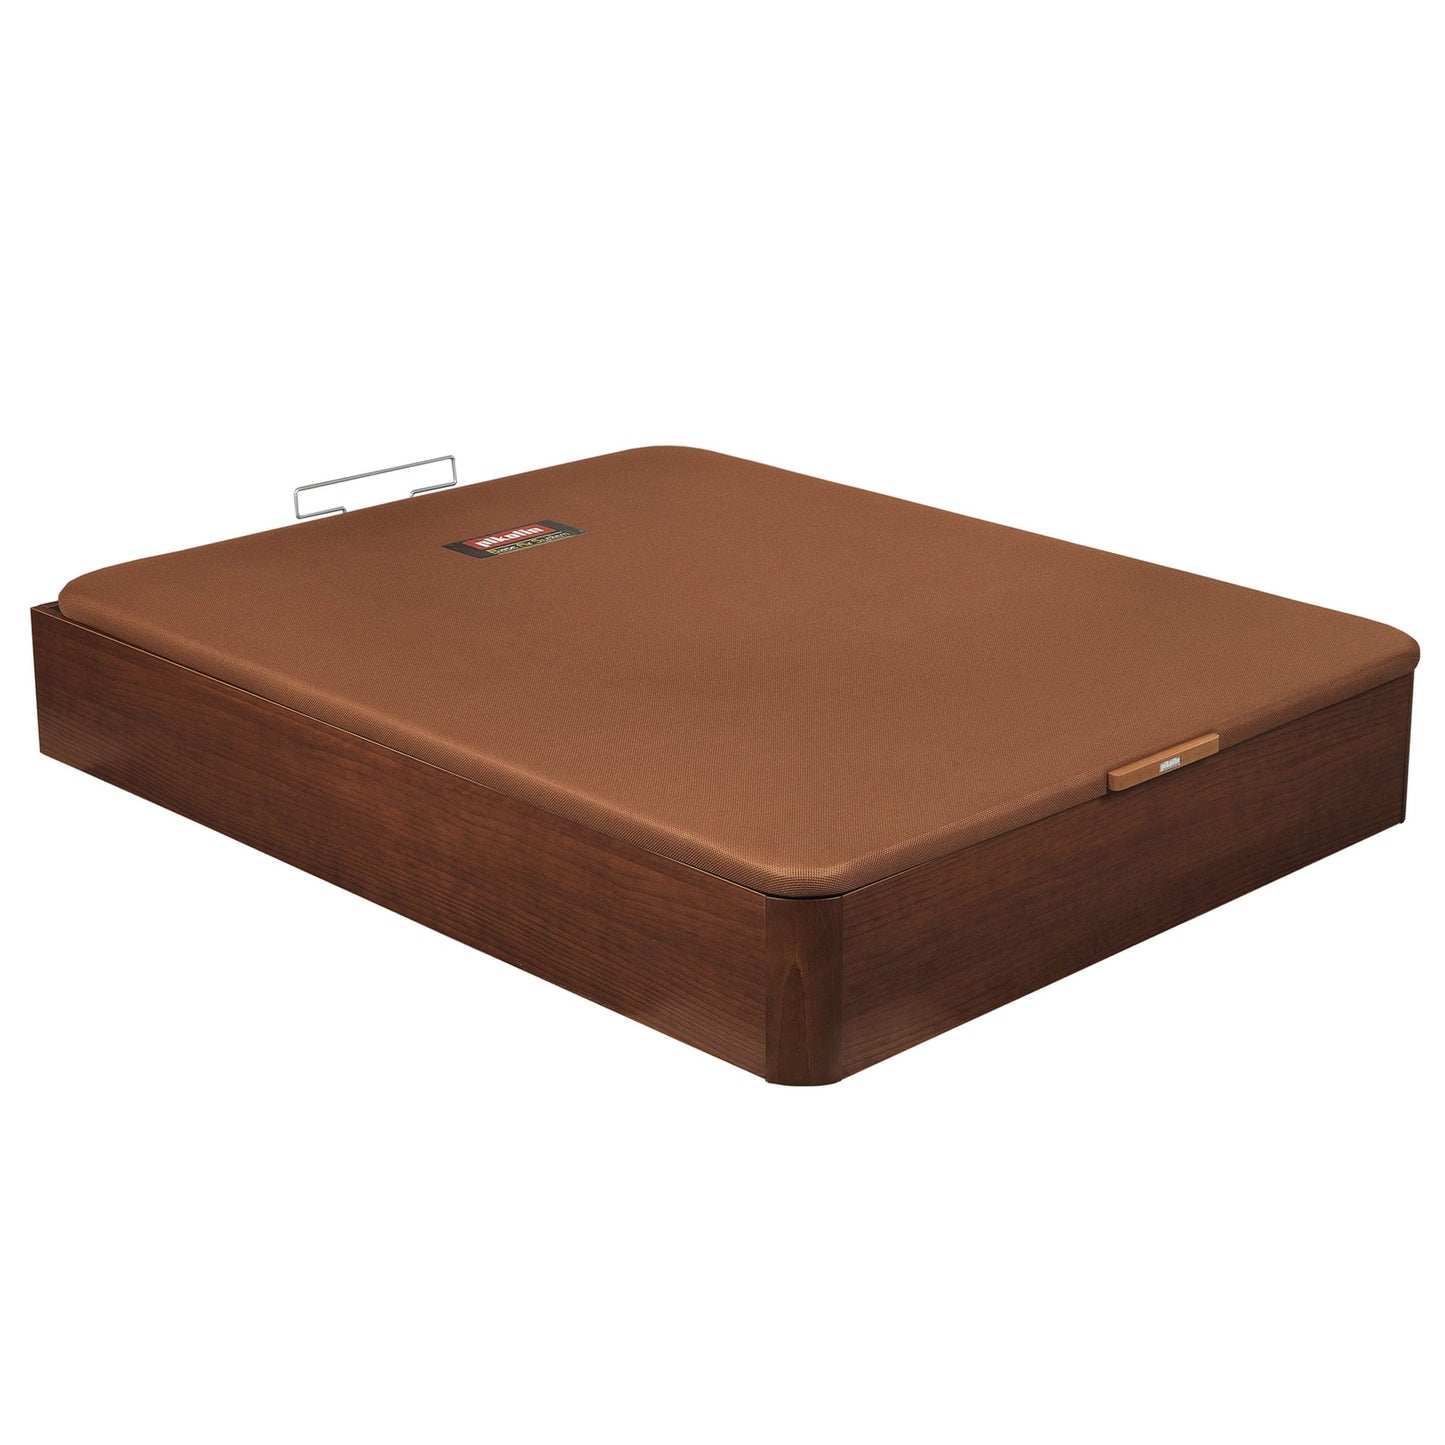 Canapé abatible de madera de color cerezo - NATURBOX CEREZO - 105x200